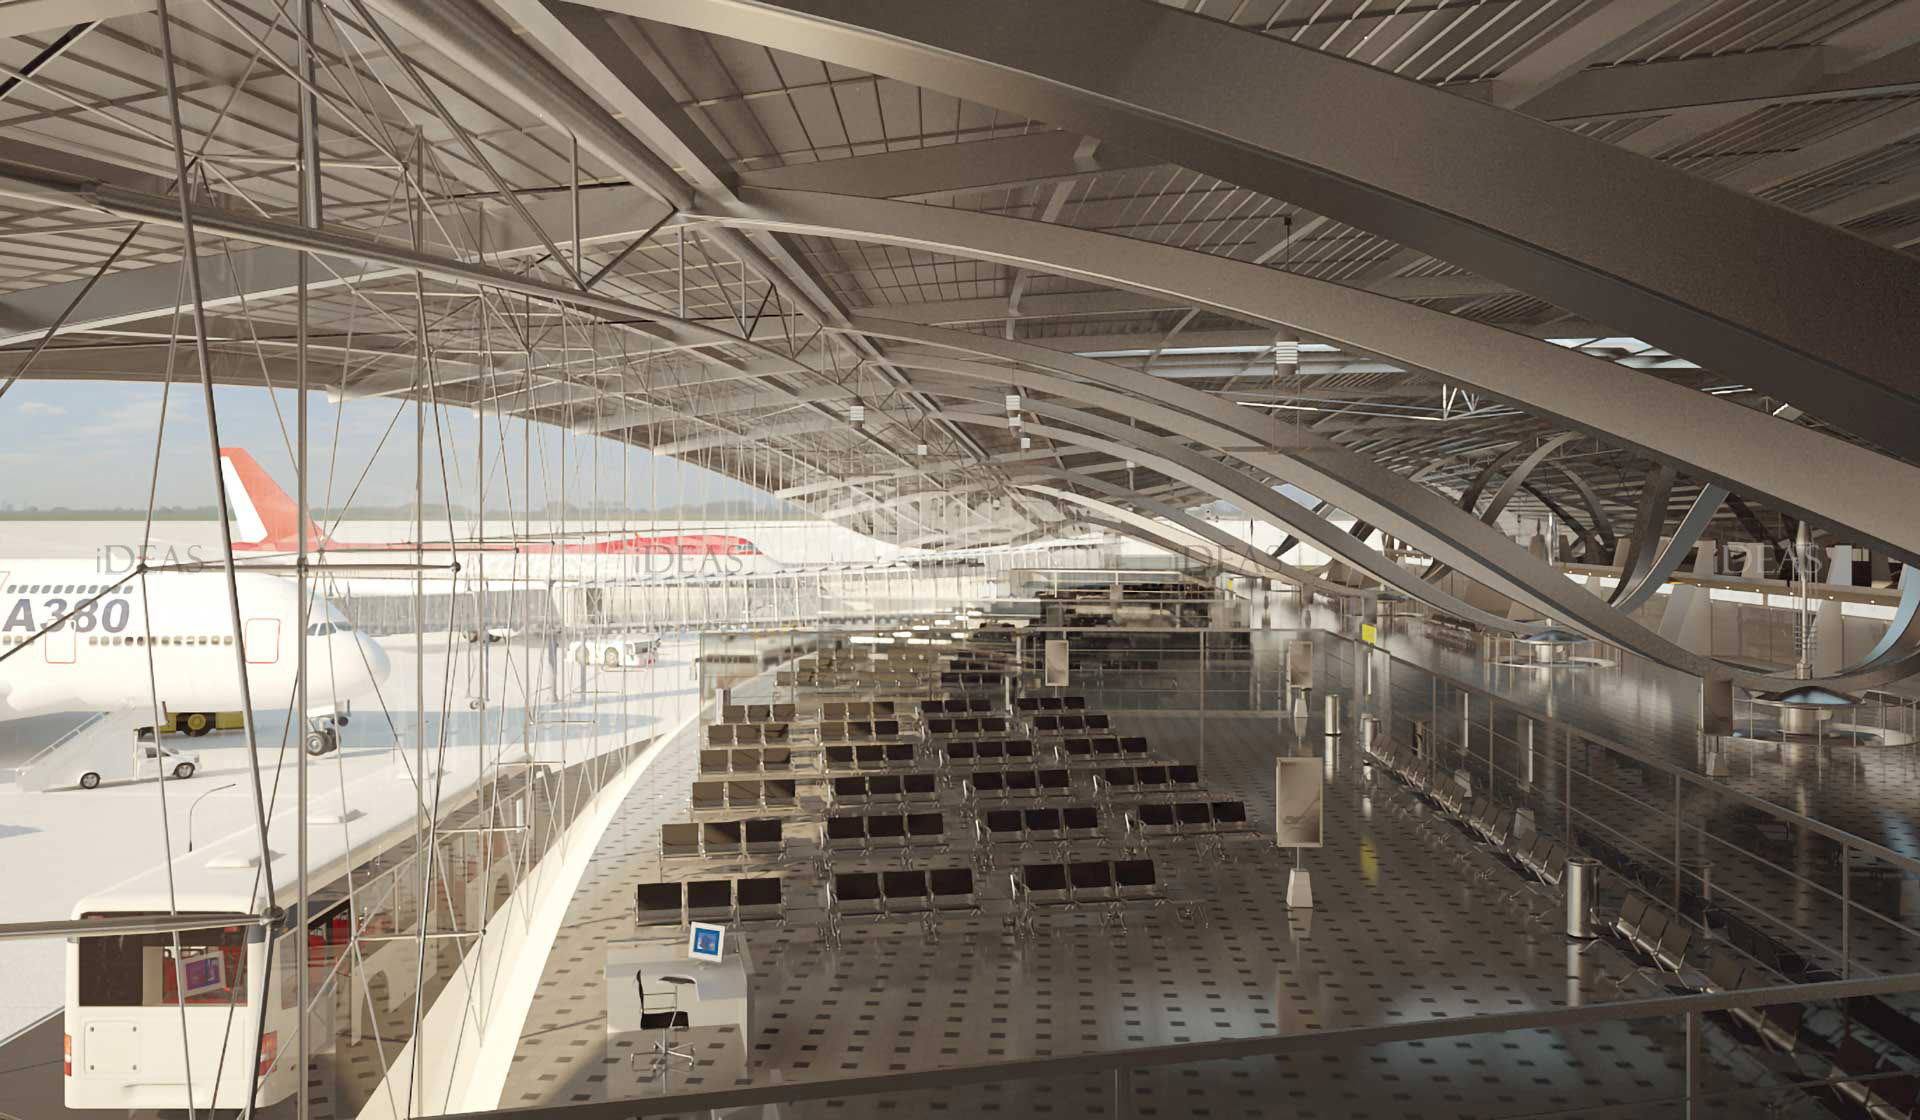 uyo roof architecture airport structure engineering computational design parametric